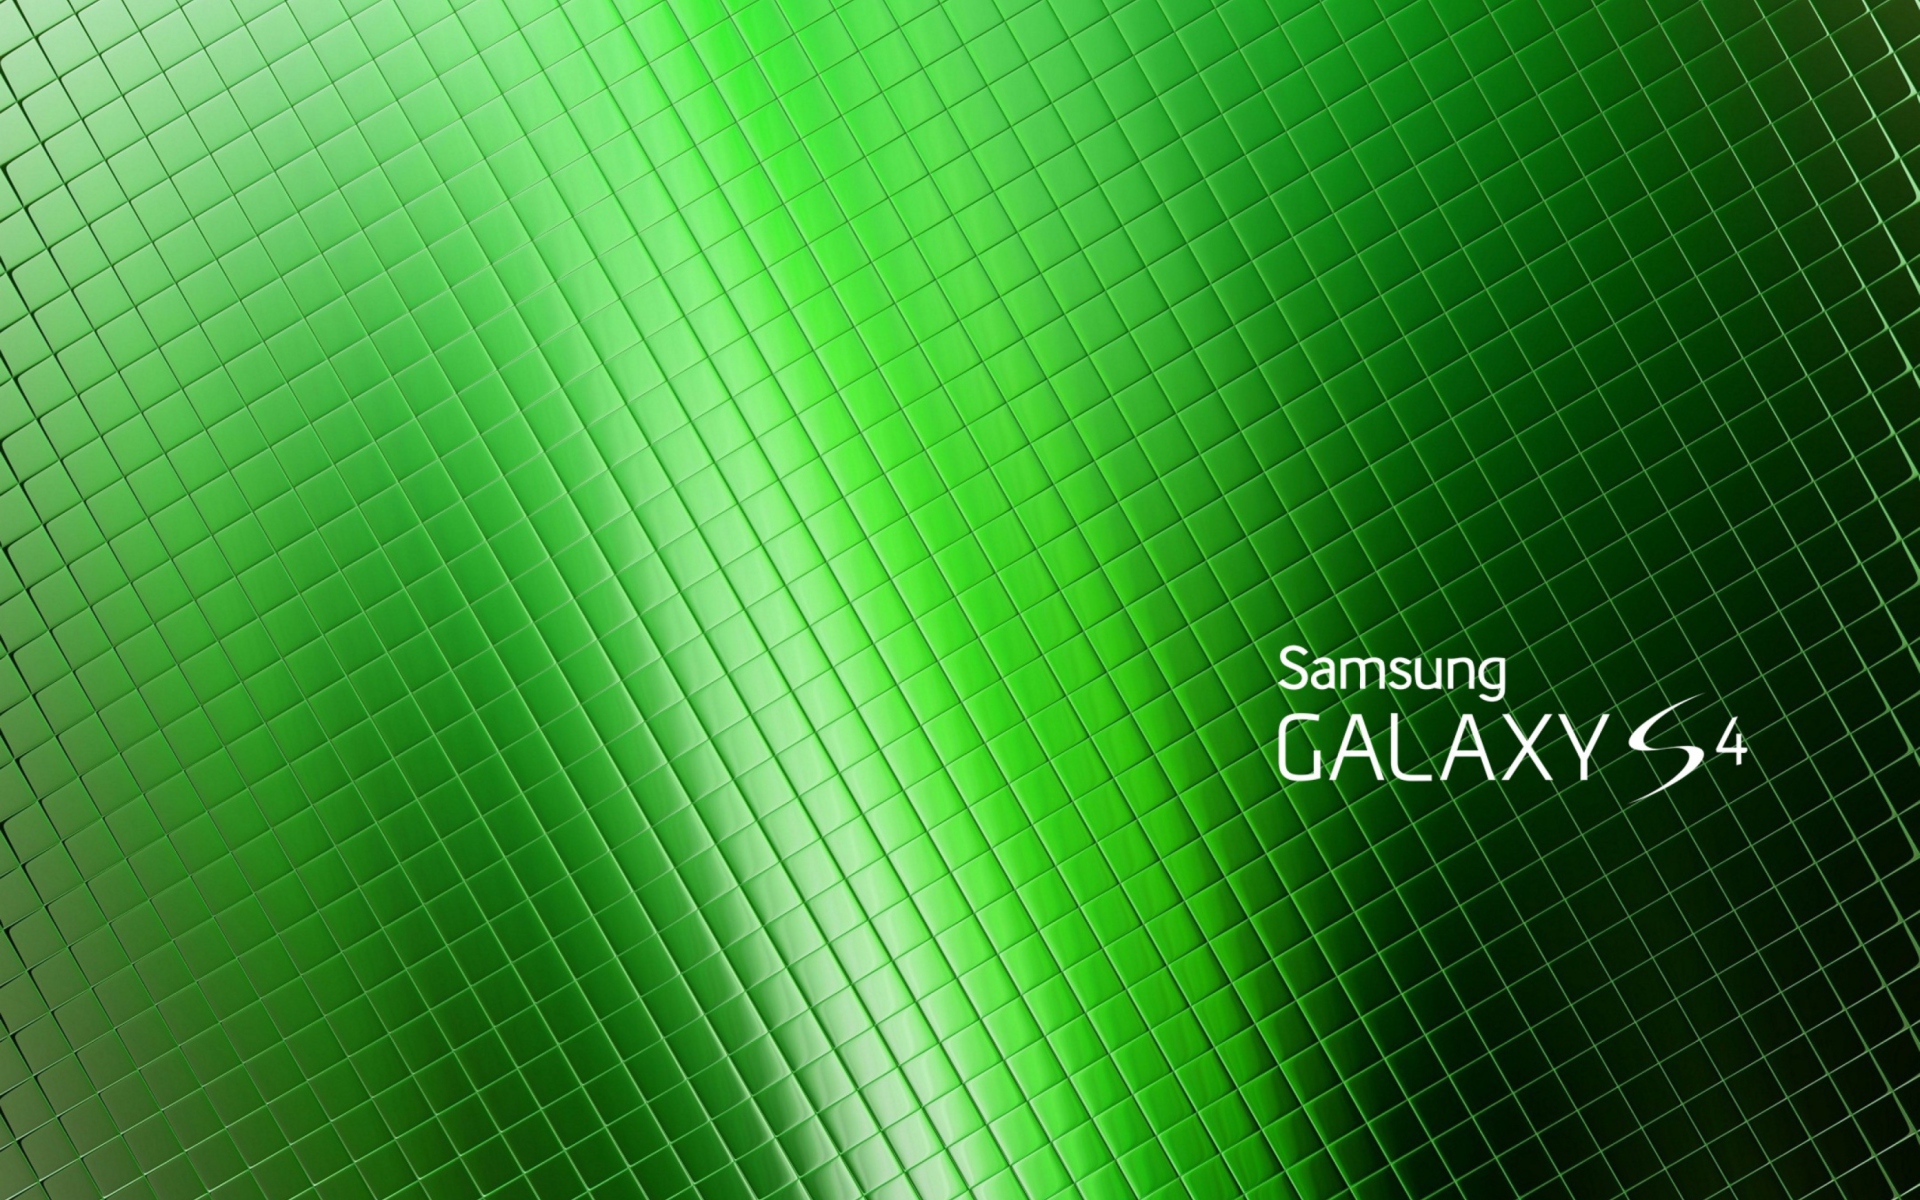 Galaxy S4 Wallpaper for Widescreen Desktop PC 1920x1080 Full HD